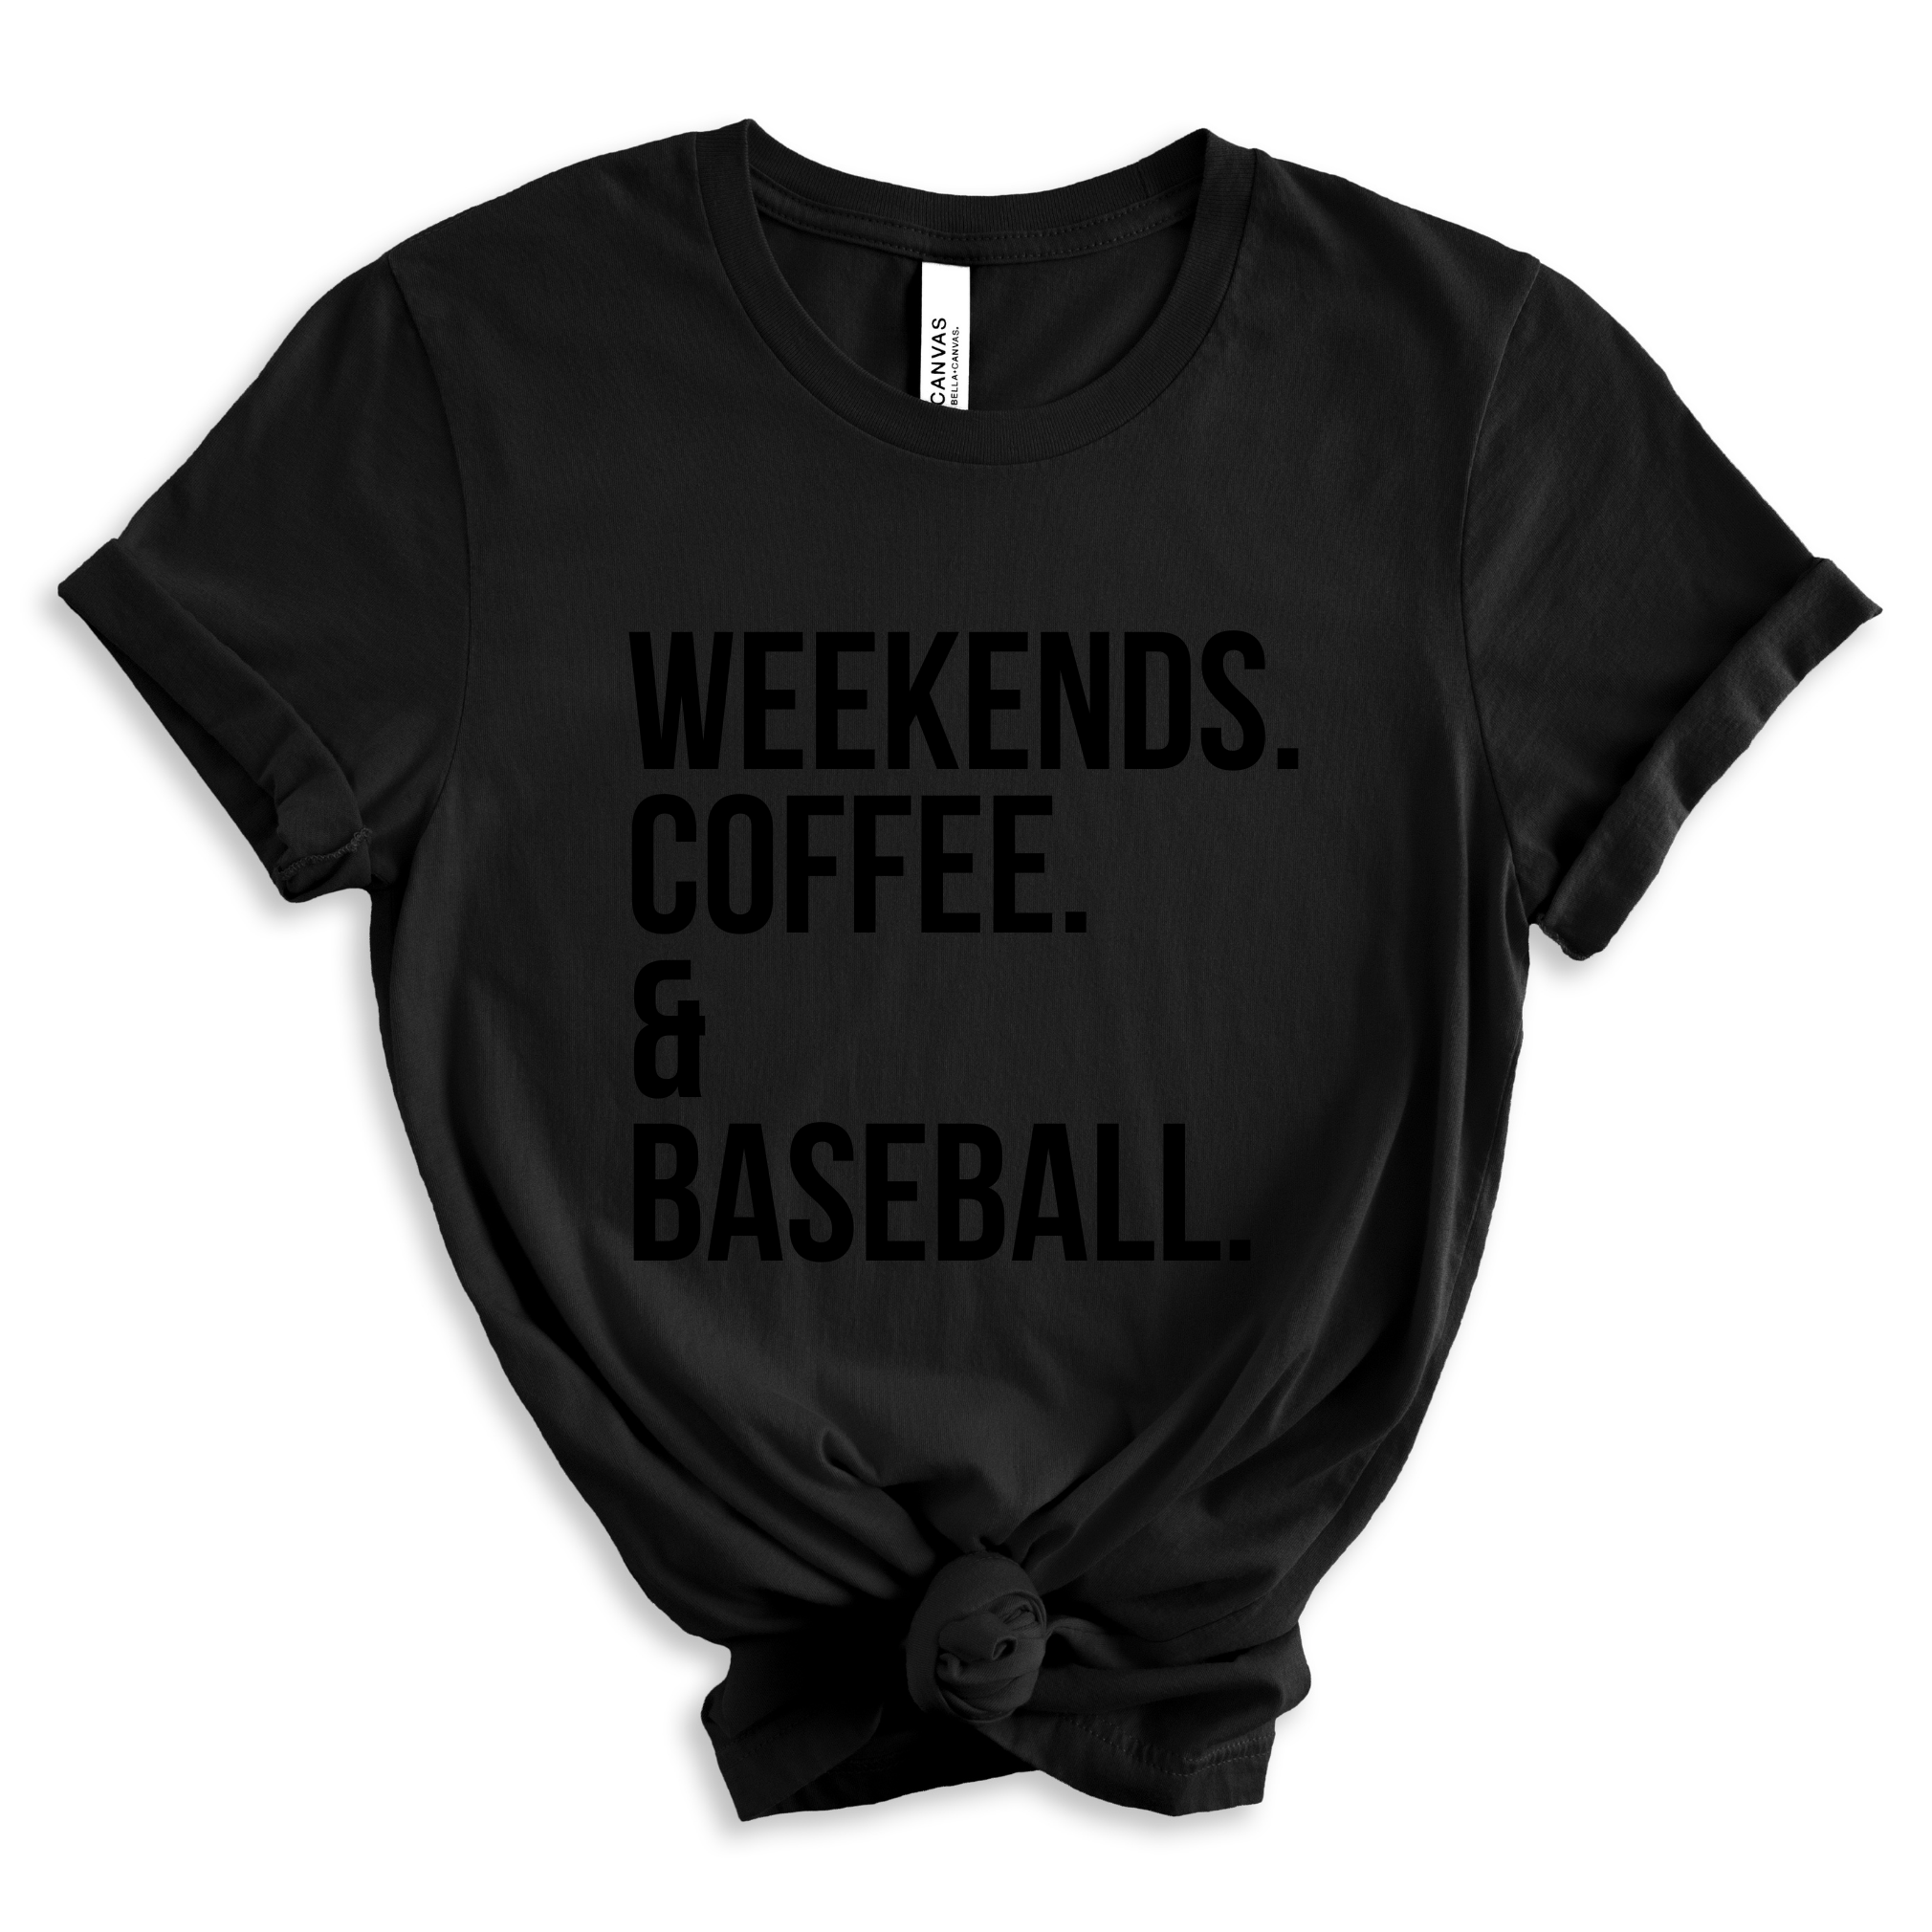 Weekends. Coffee. & Baseball Tee